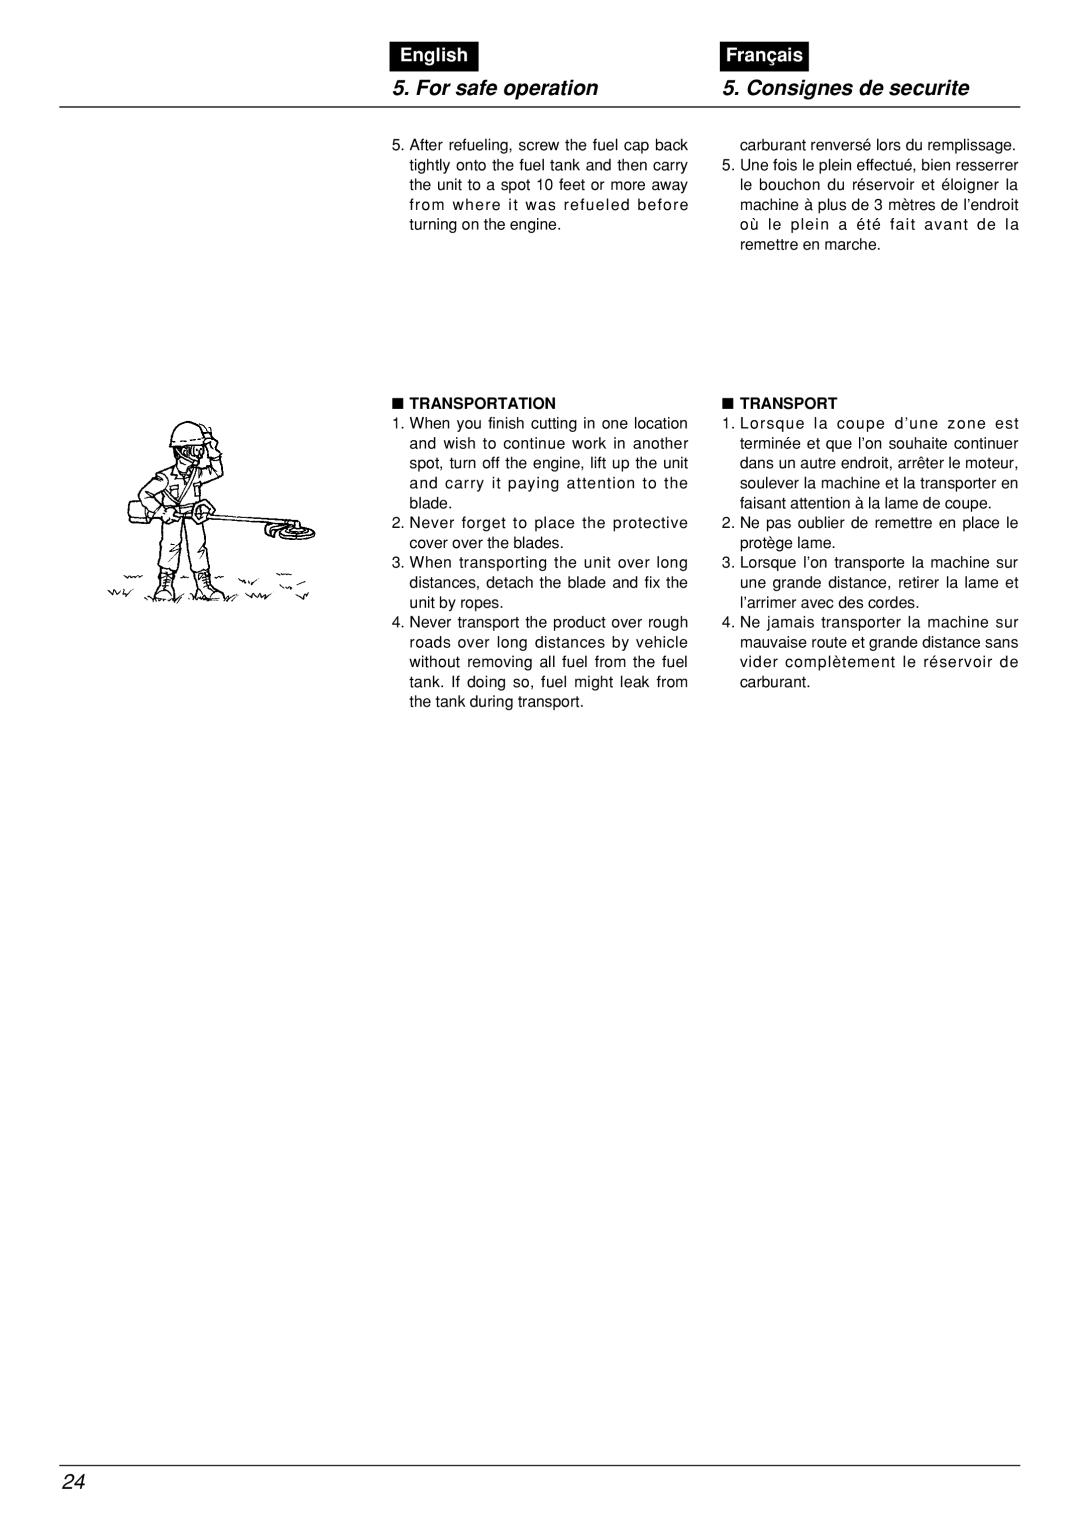 Zenoah BCX2601DL manual For safe operation, Consignes de securite, English, Français, Transportation 